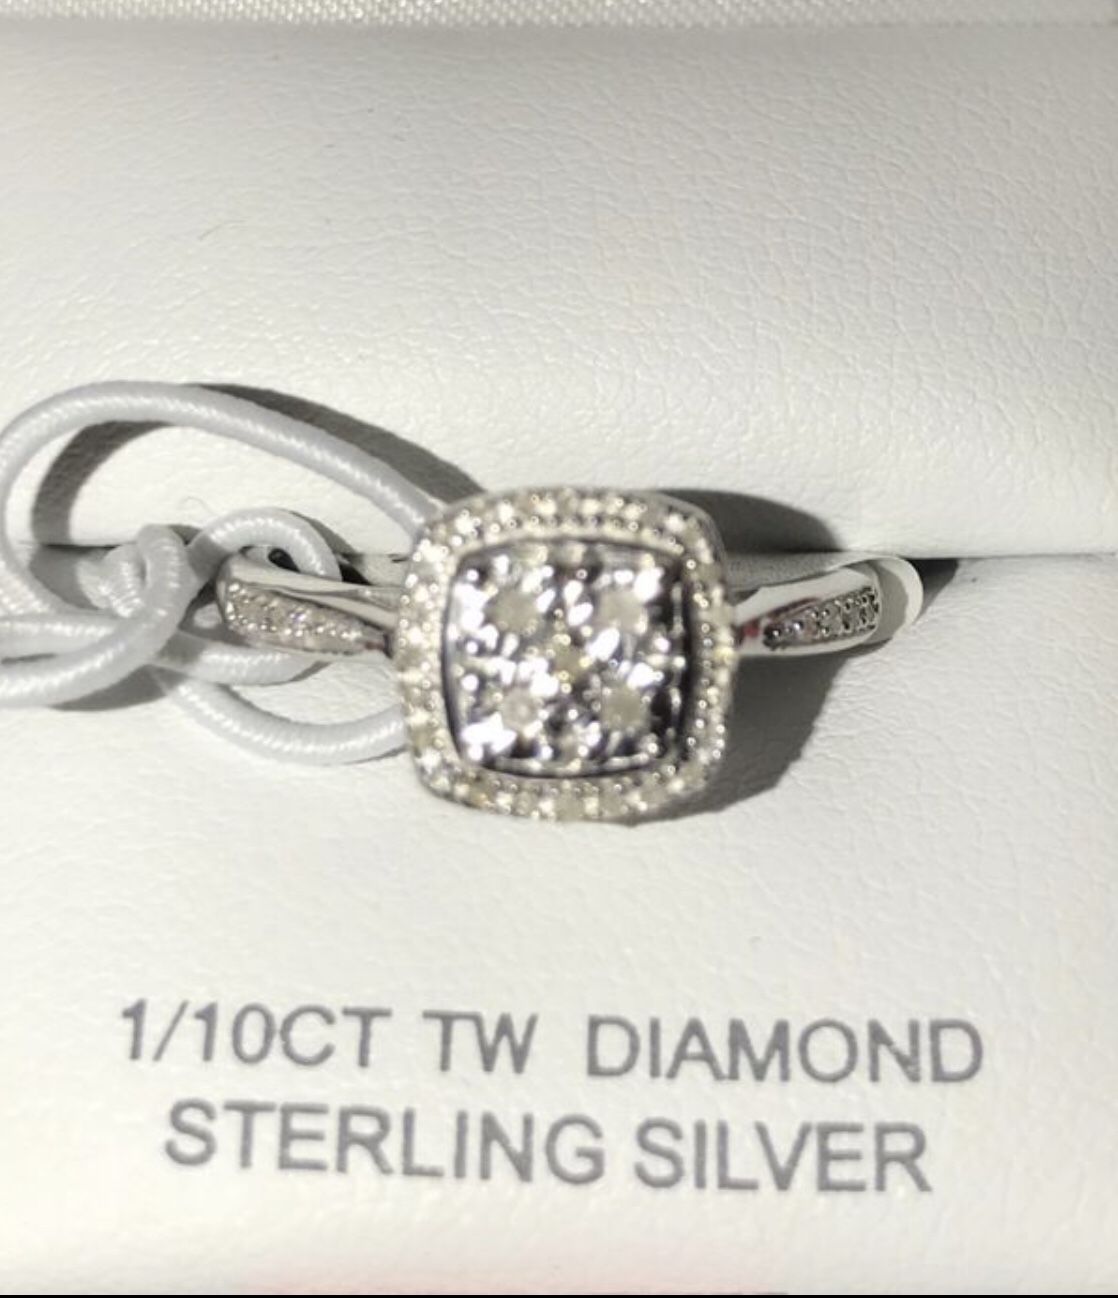 Brand new 1/10 diamond ring size 7 $60